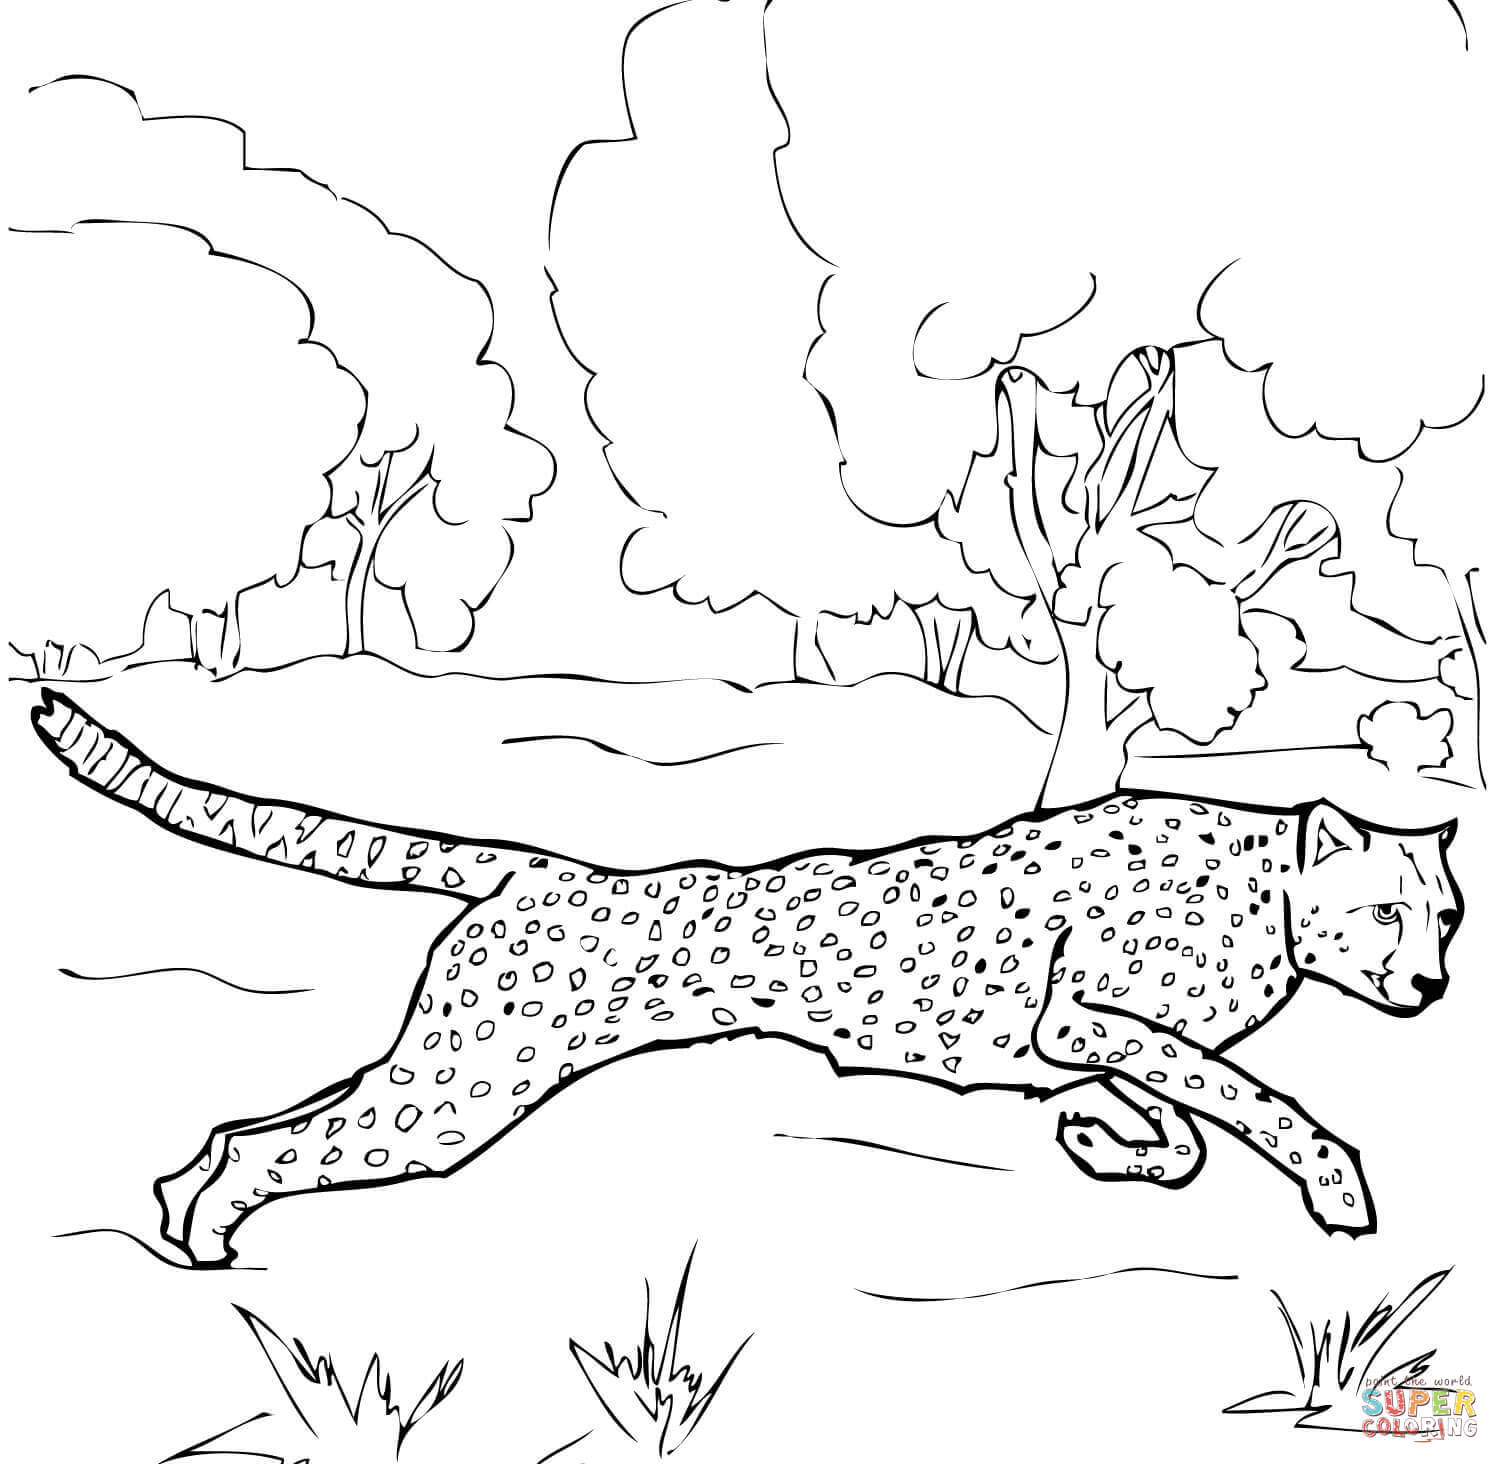 Running Cheetah Coloring Page | Free Printable Coloring Pages - Free Printable Cheetah Pictures